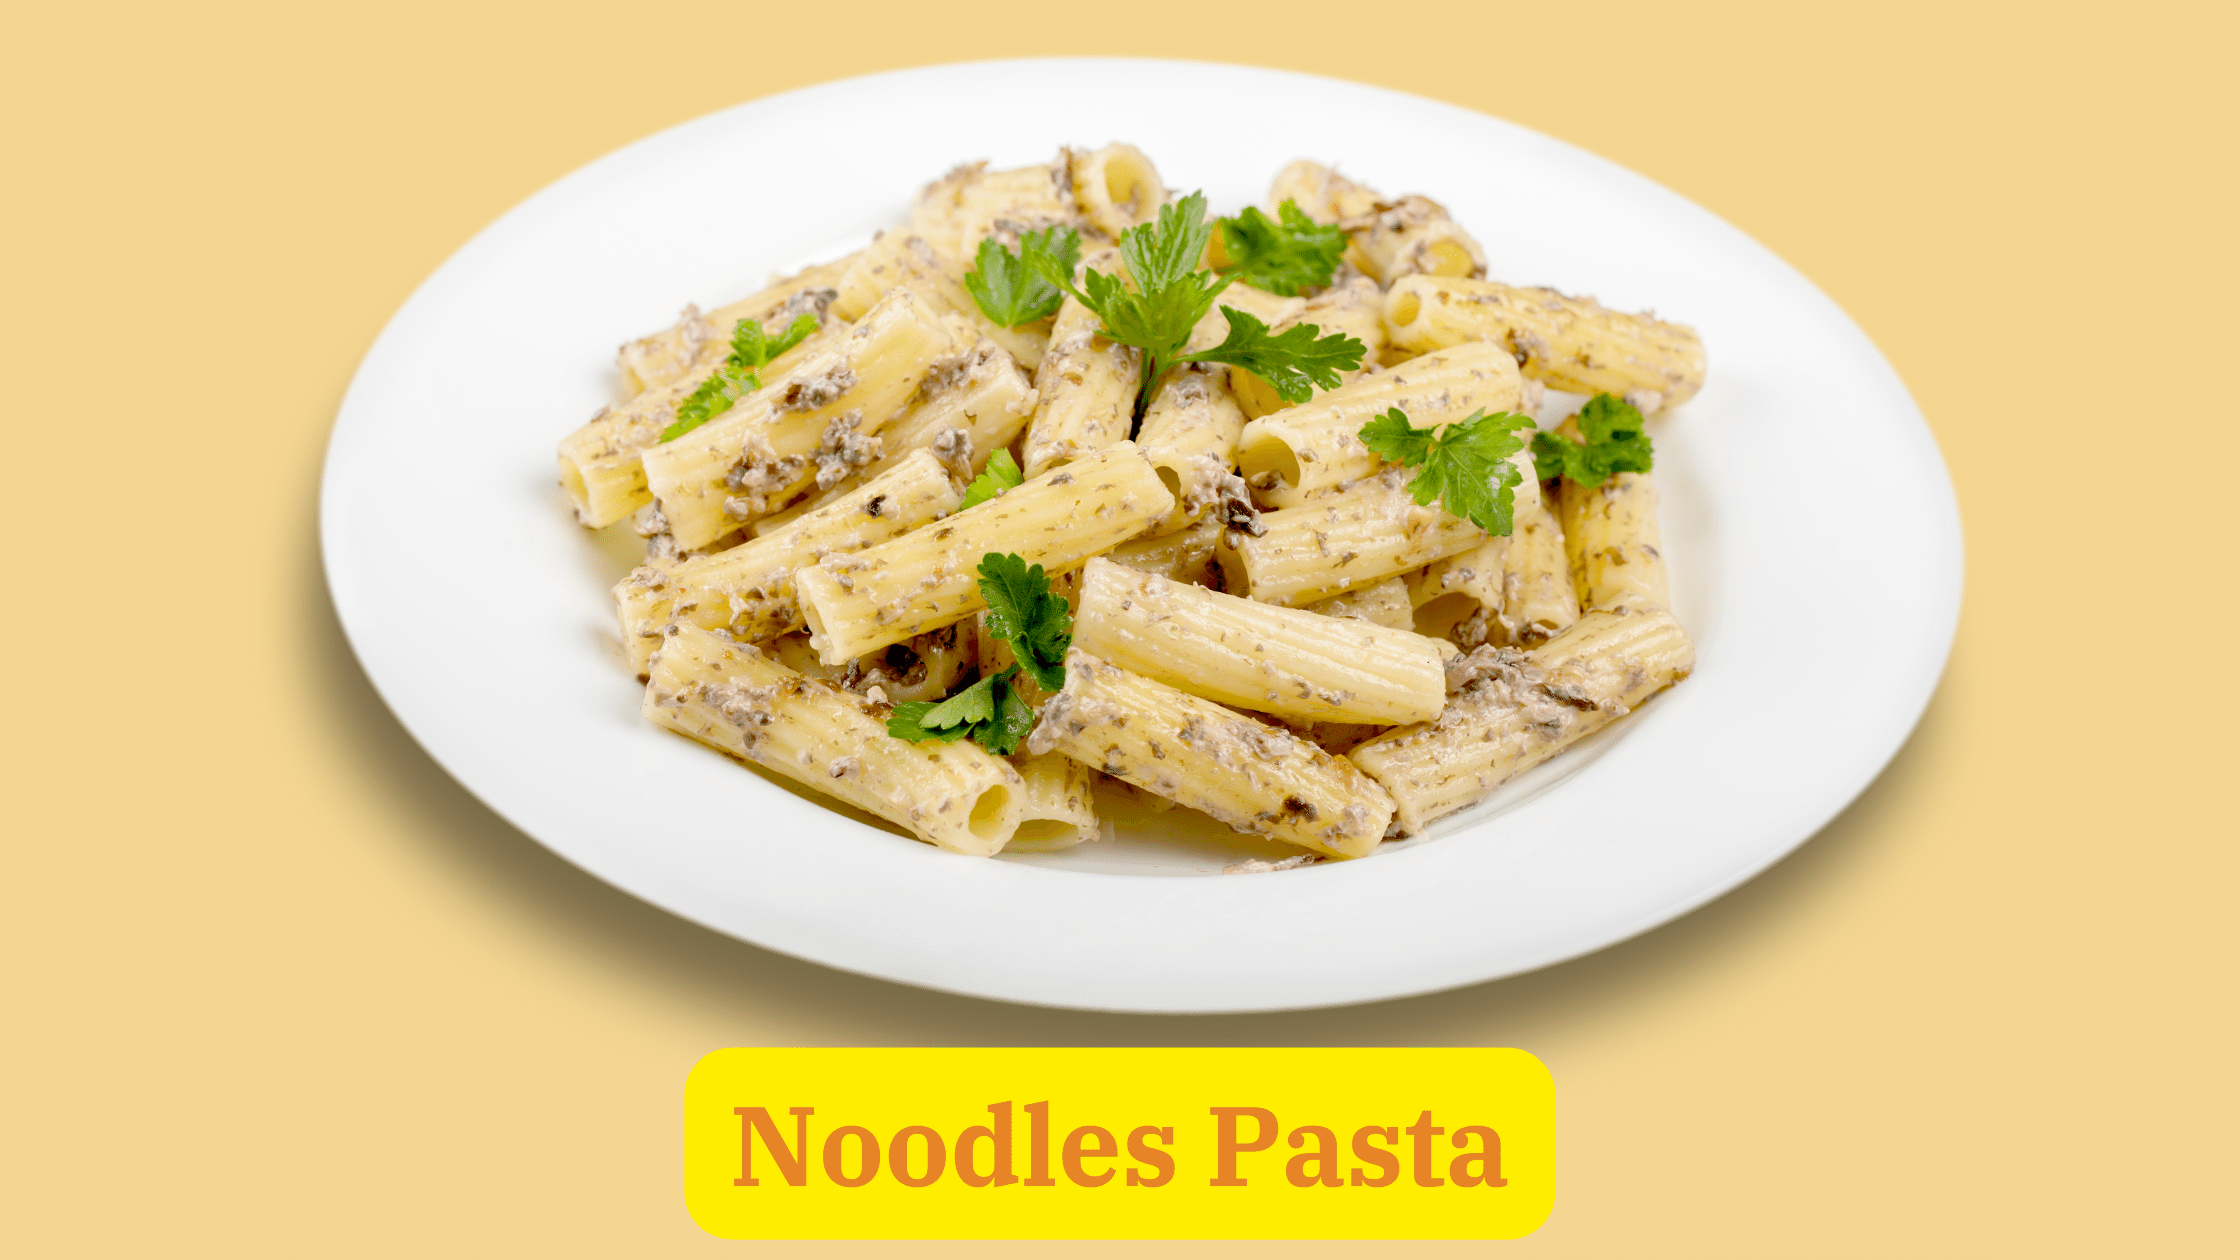 Are Noodles Pasta